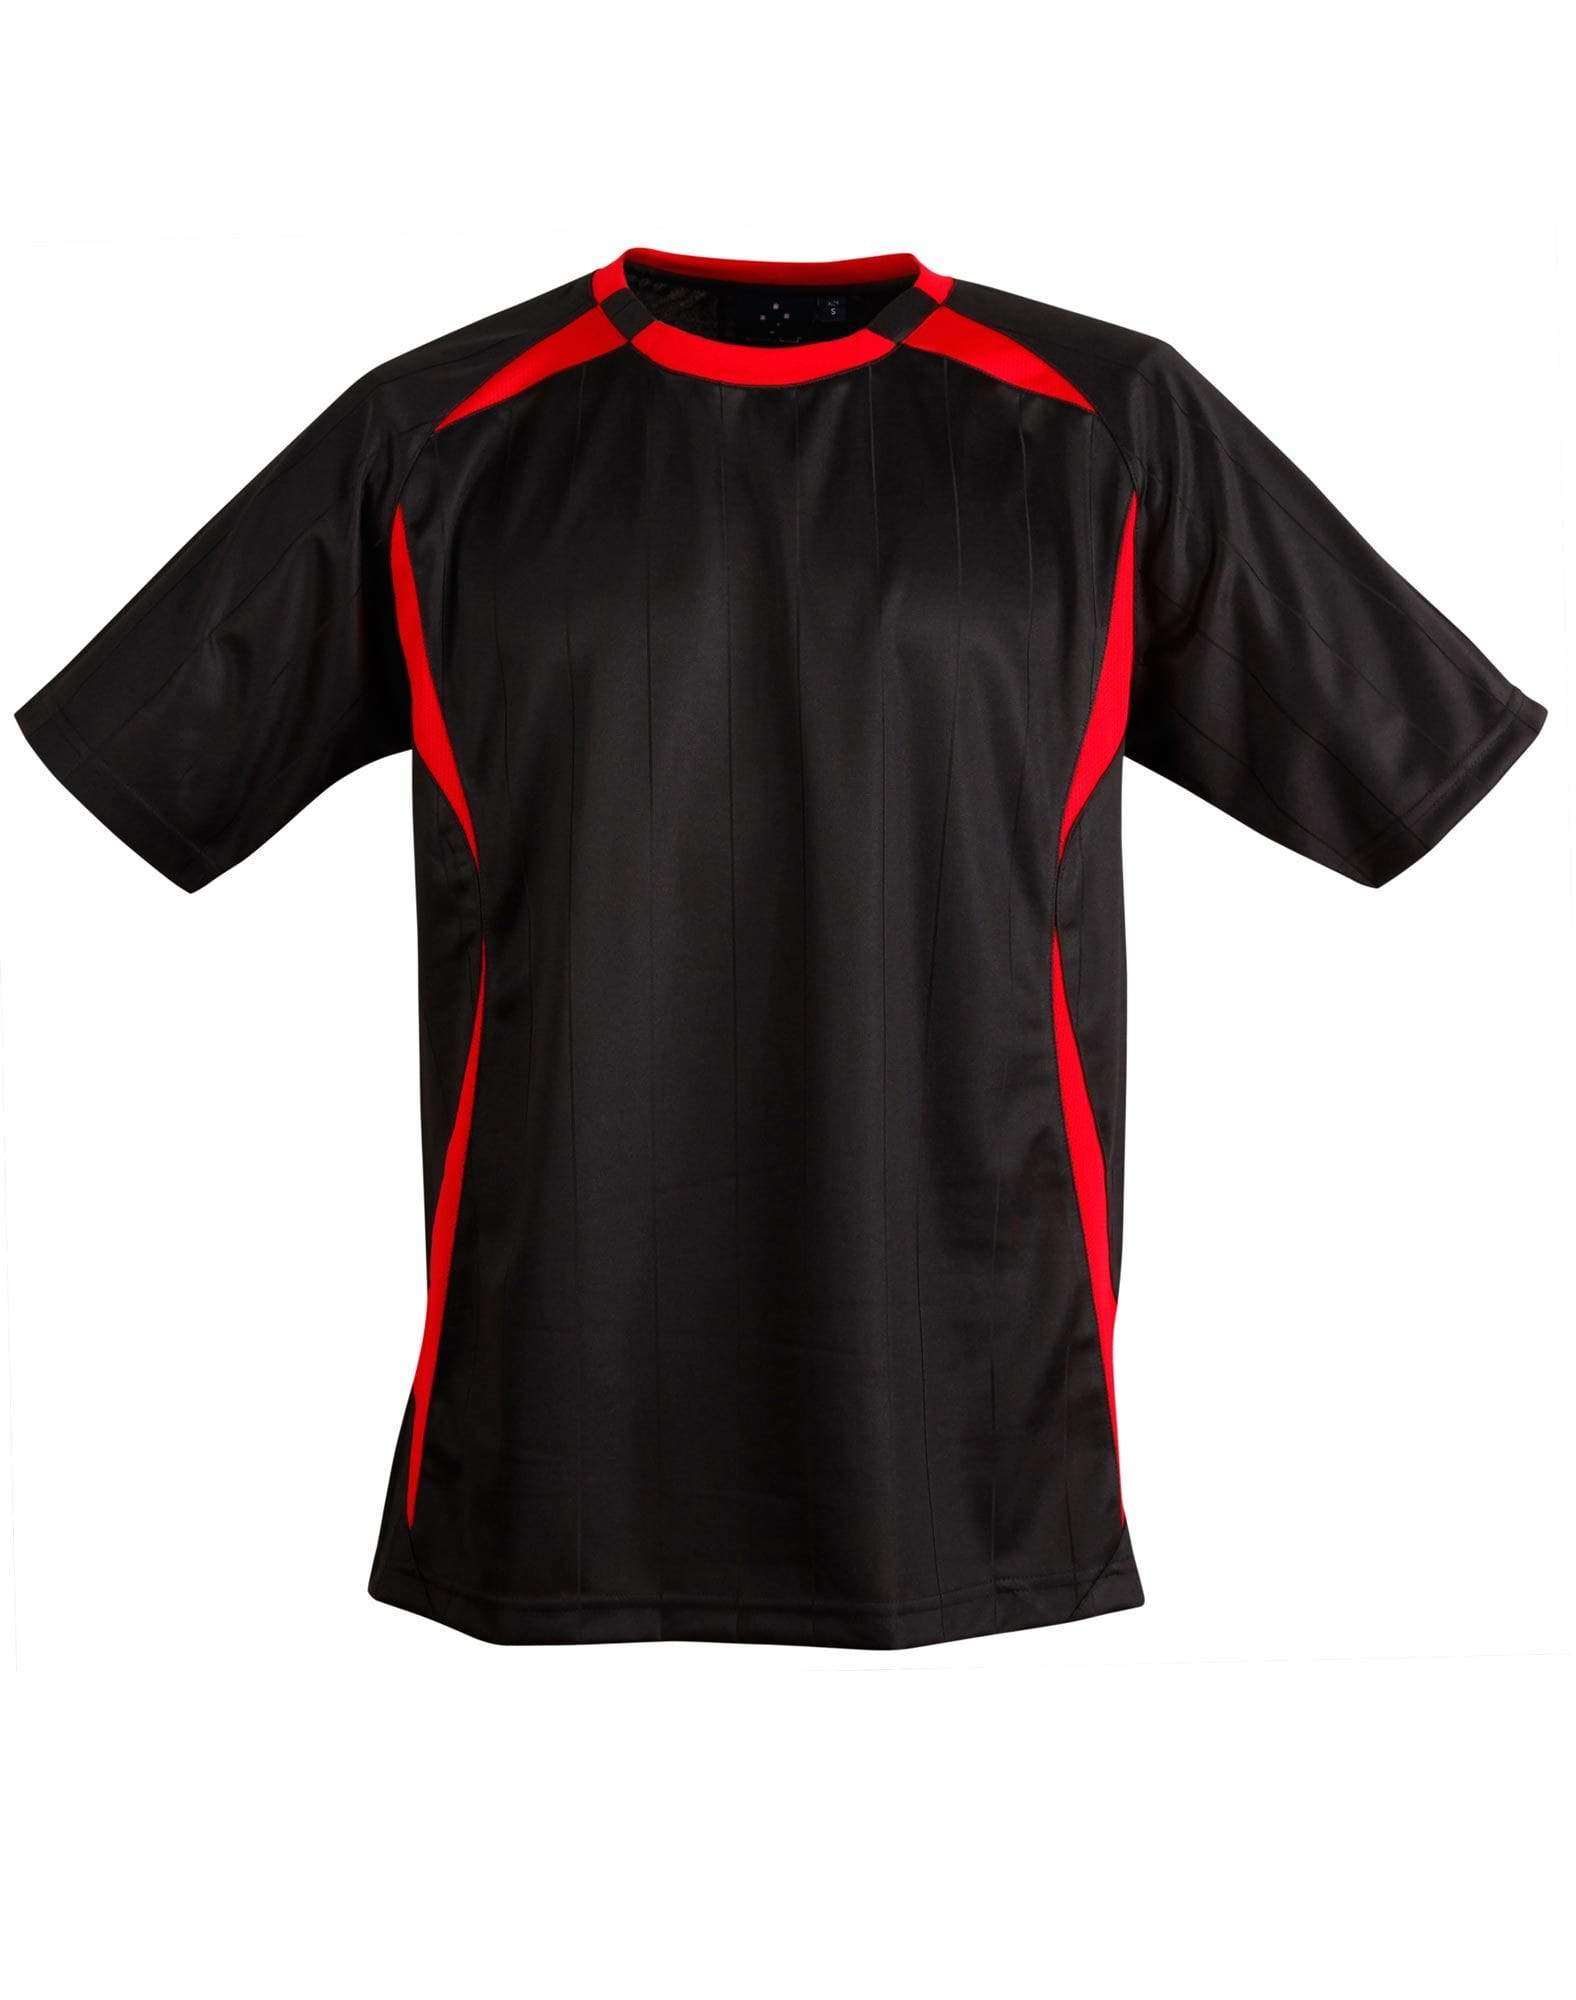 Shoot Soccer Tee Adult Ts85 Casual Wear Winning Spirit Black/Red S 